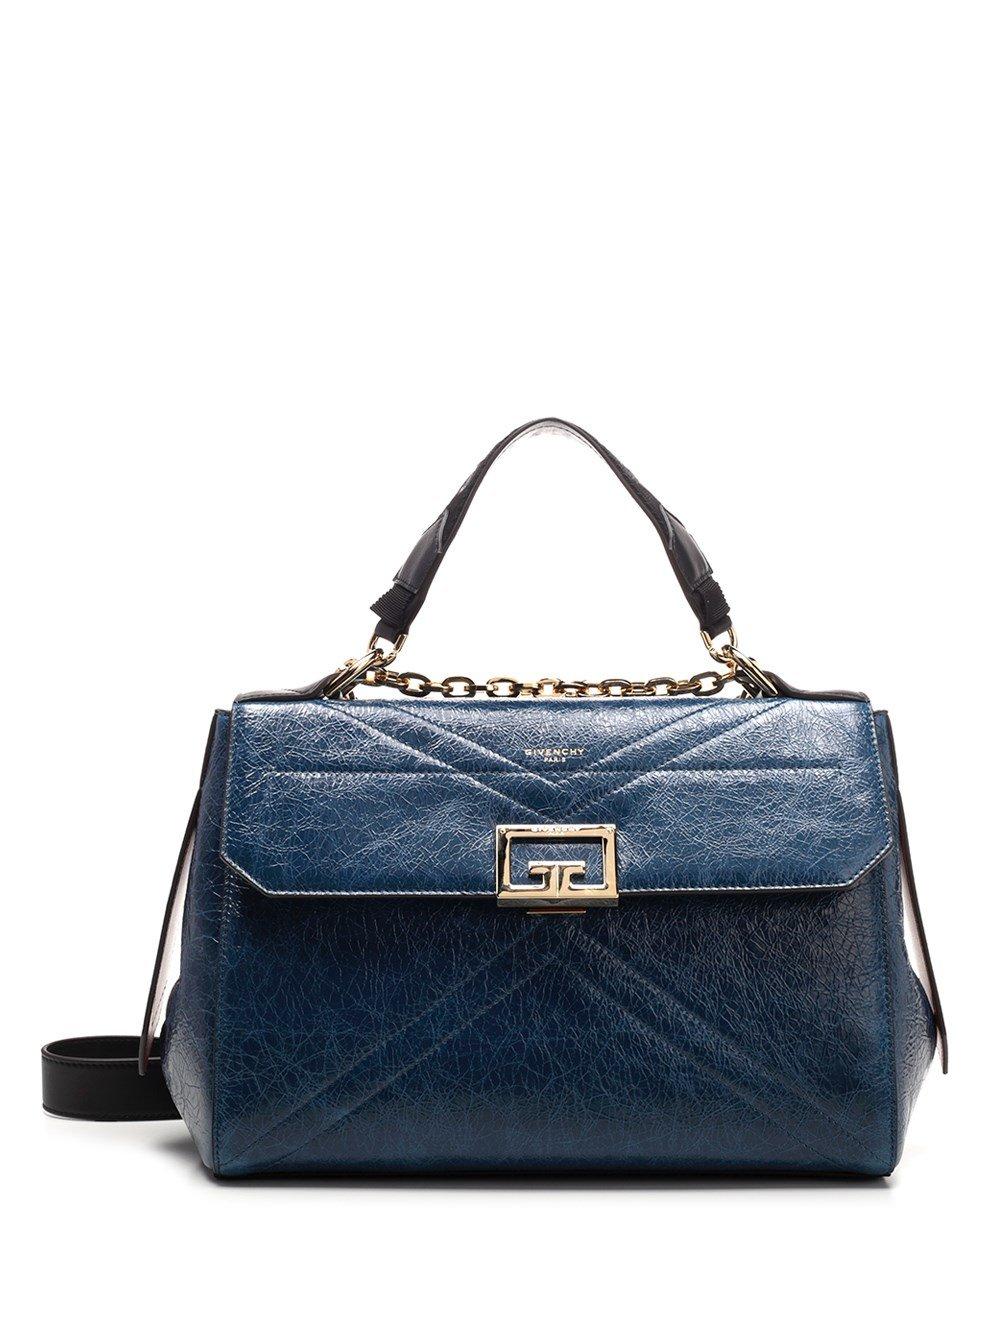 Givenchy Leather Id Medium Shoulder Bag in Blue - Lyst